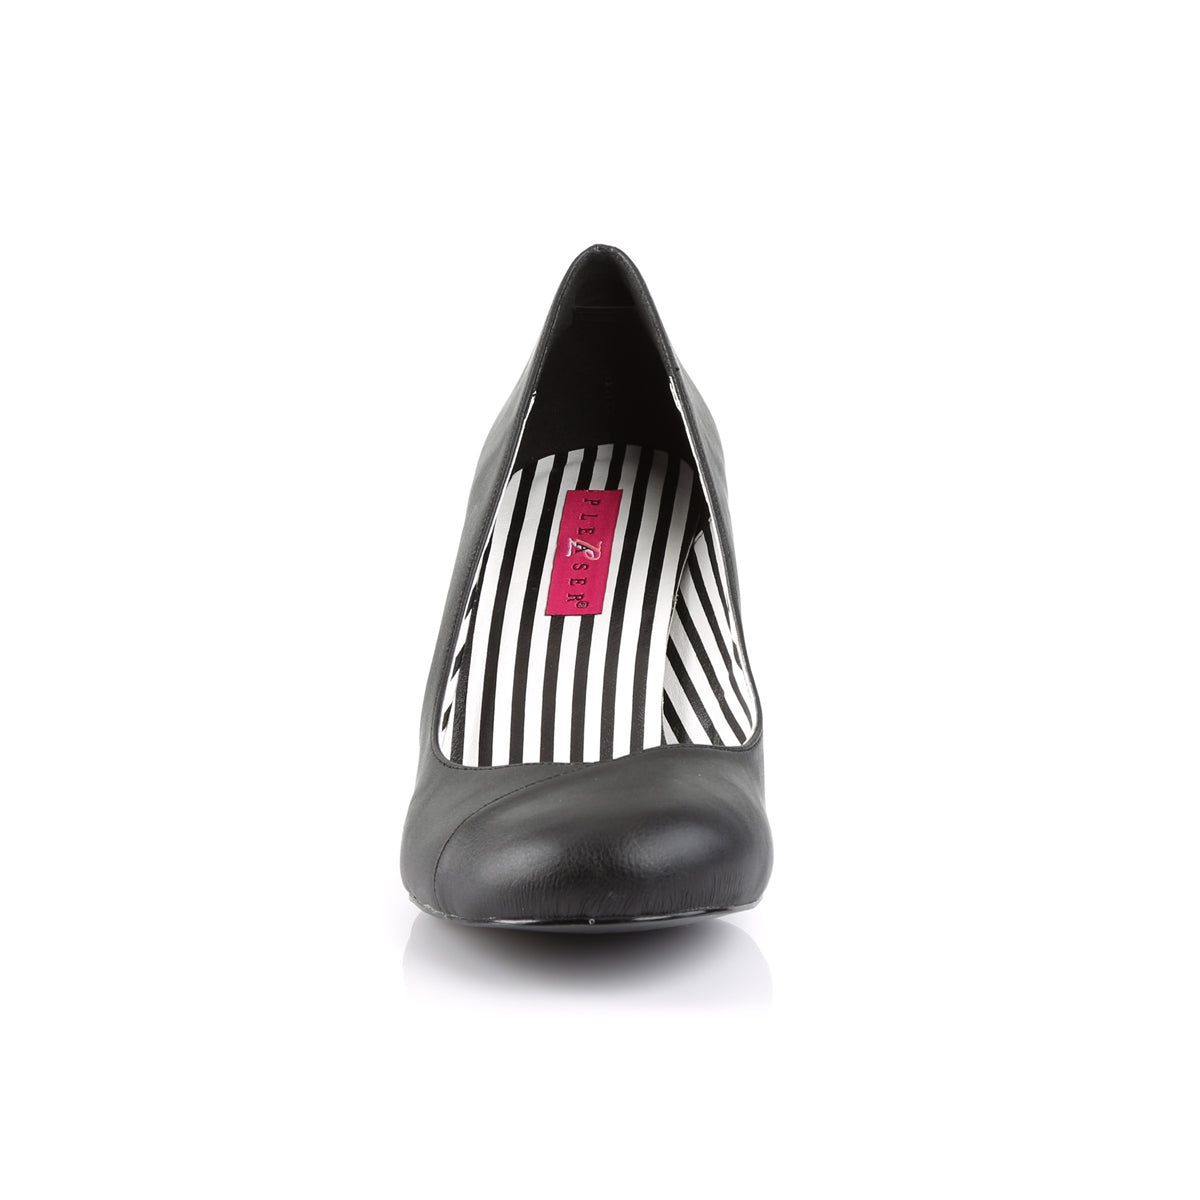 JENNA-01 Large Size Ladies Shoes Pleaser Pink Label Single Soles Black Faux Leather